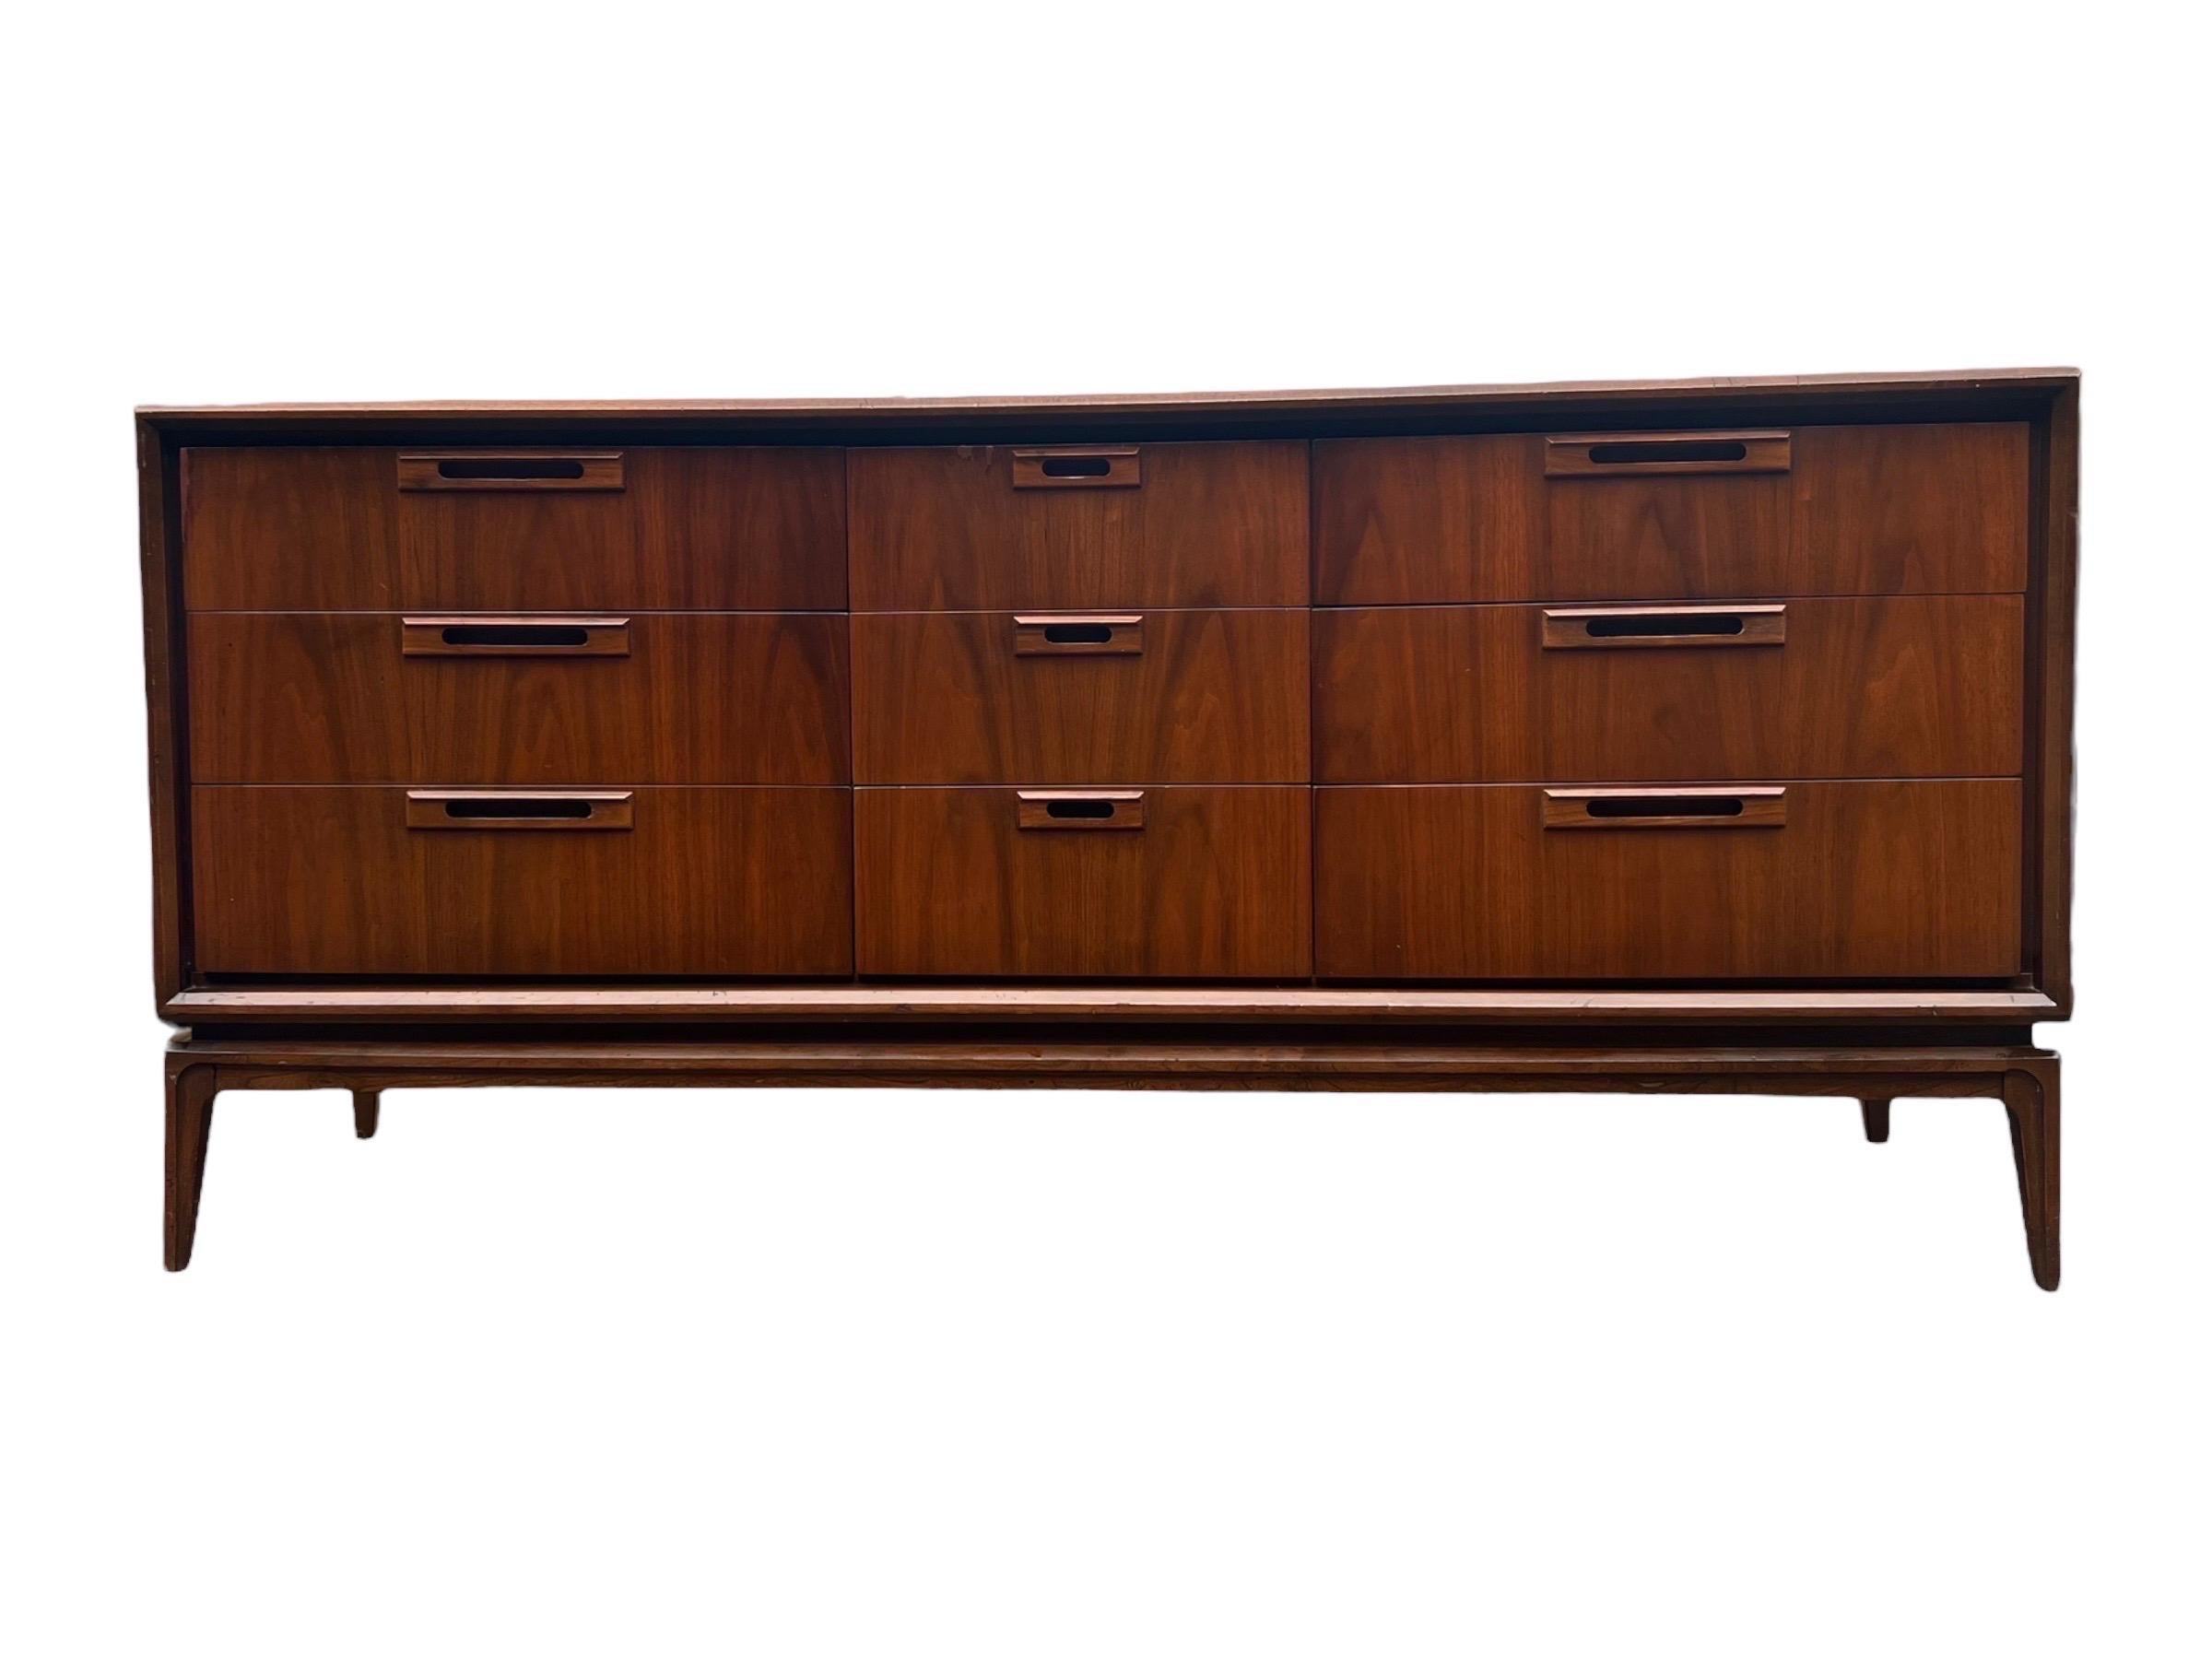 Vintage Mid Century Modern Solid Walnut 9 Drawer Dresser Recessed Pulls by Stanley

Dimensions. 66 L ; 19 P ; 31 H